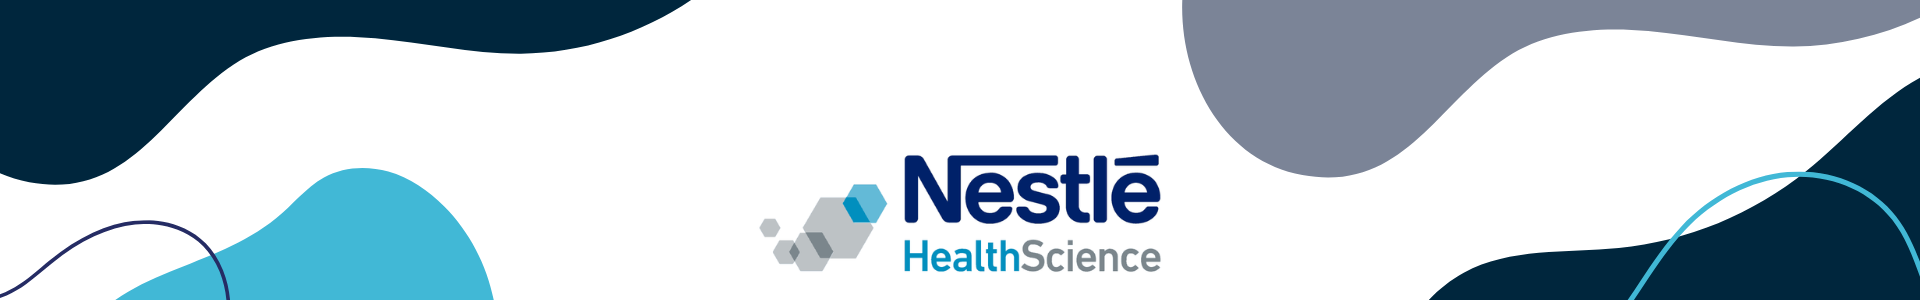 Marca Nestlé Health Science